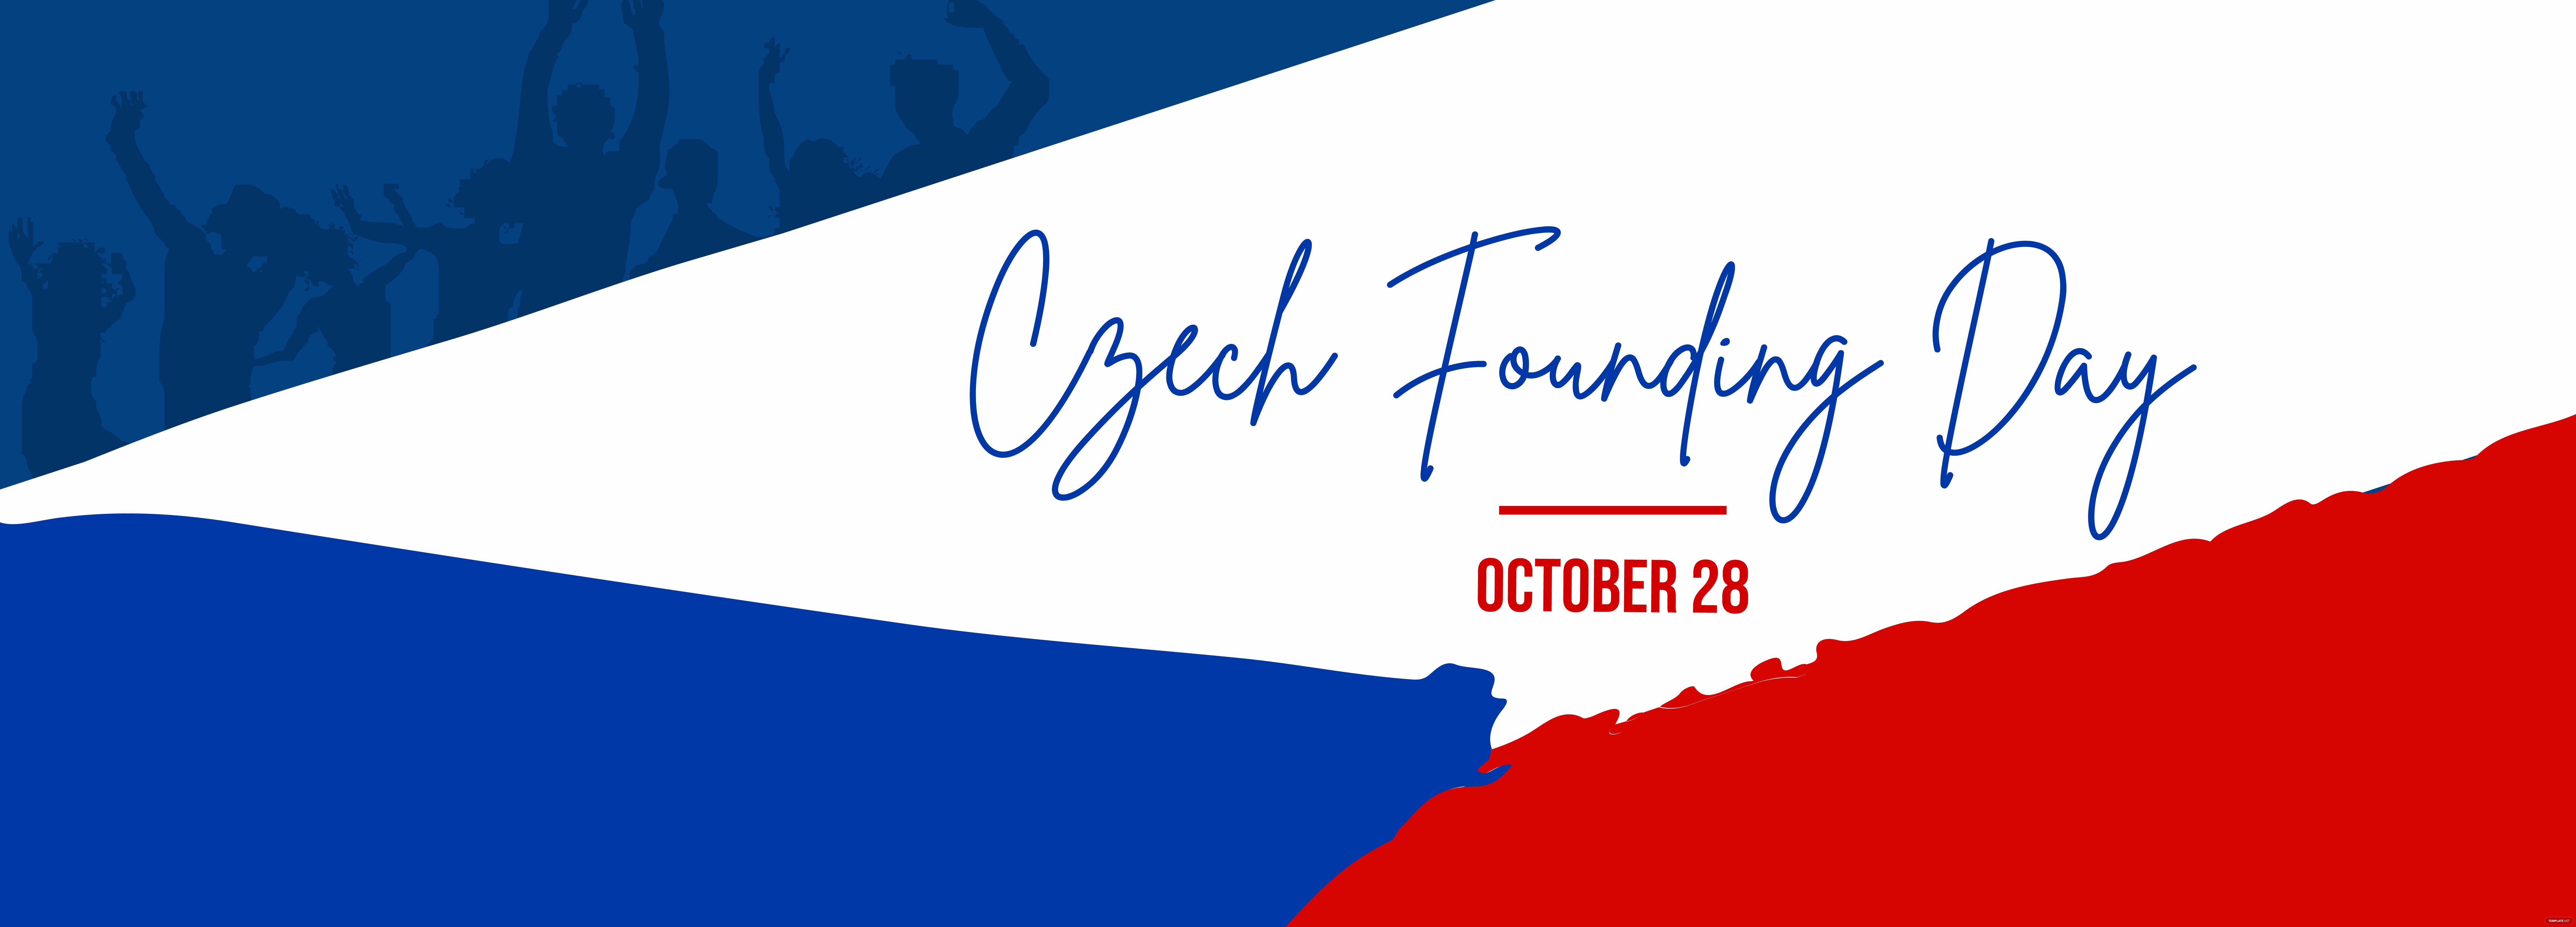 czech founding day banner ideas examples